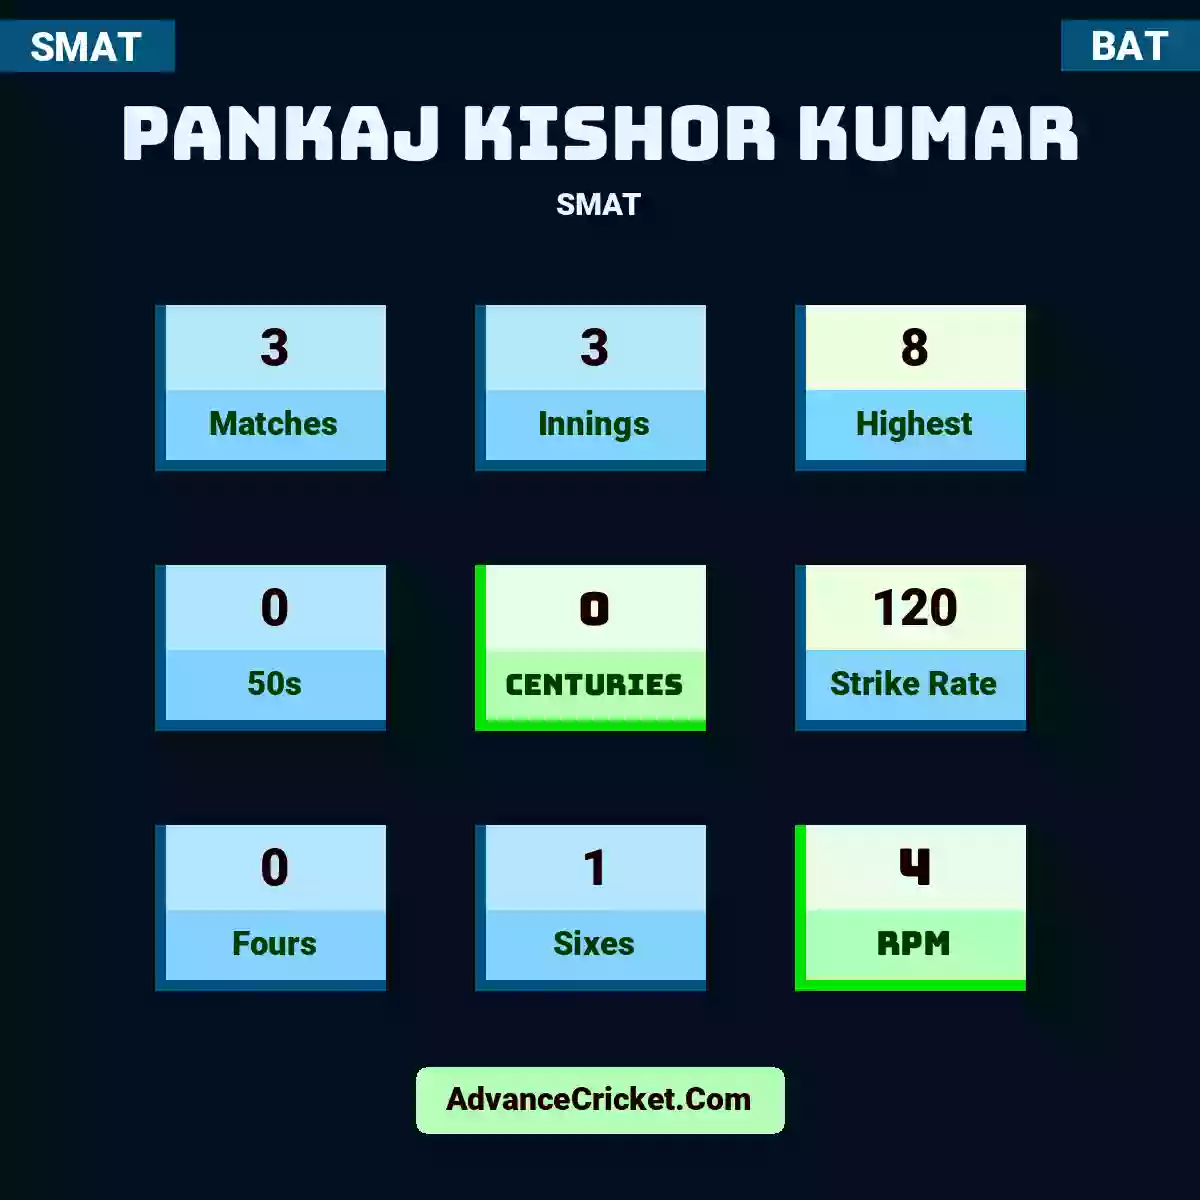 Pankaj Kishor Kumar SMAT , Pankaj Kishor Kumar played 3 matches, scored 8 runs as highest, 0 half-centuries, and 0 centuries, with a strike rate of 120. P.Kumar hit 0 fours and 1 sixes, with an RPM of 4.